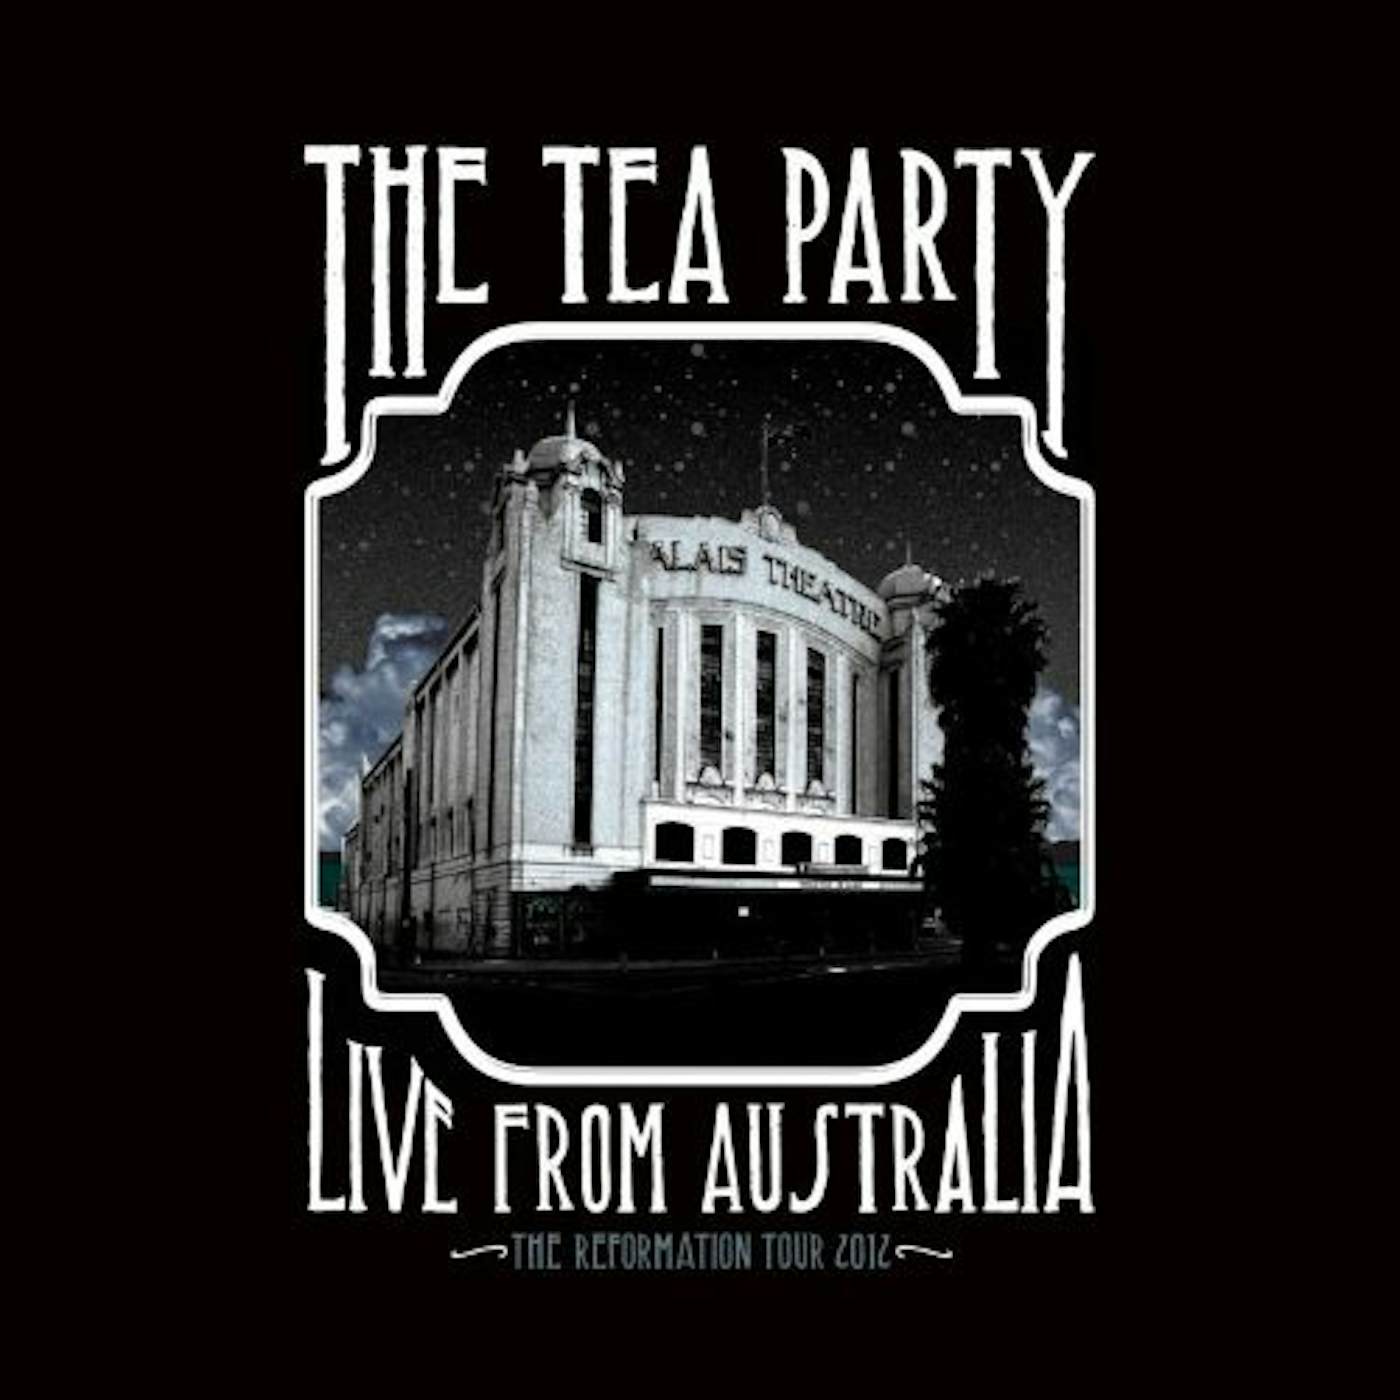 The Tea Party LIVE FROM AUSTRALIA Vinyl Record